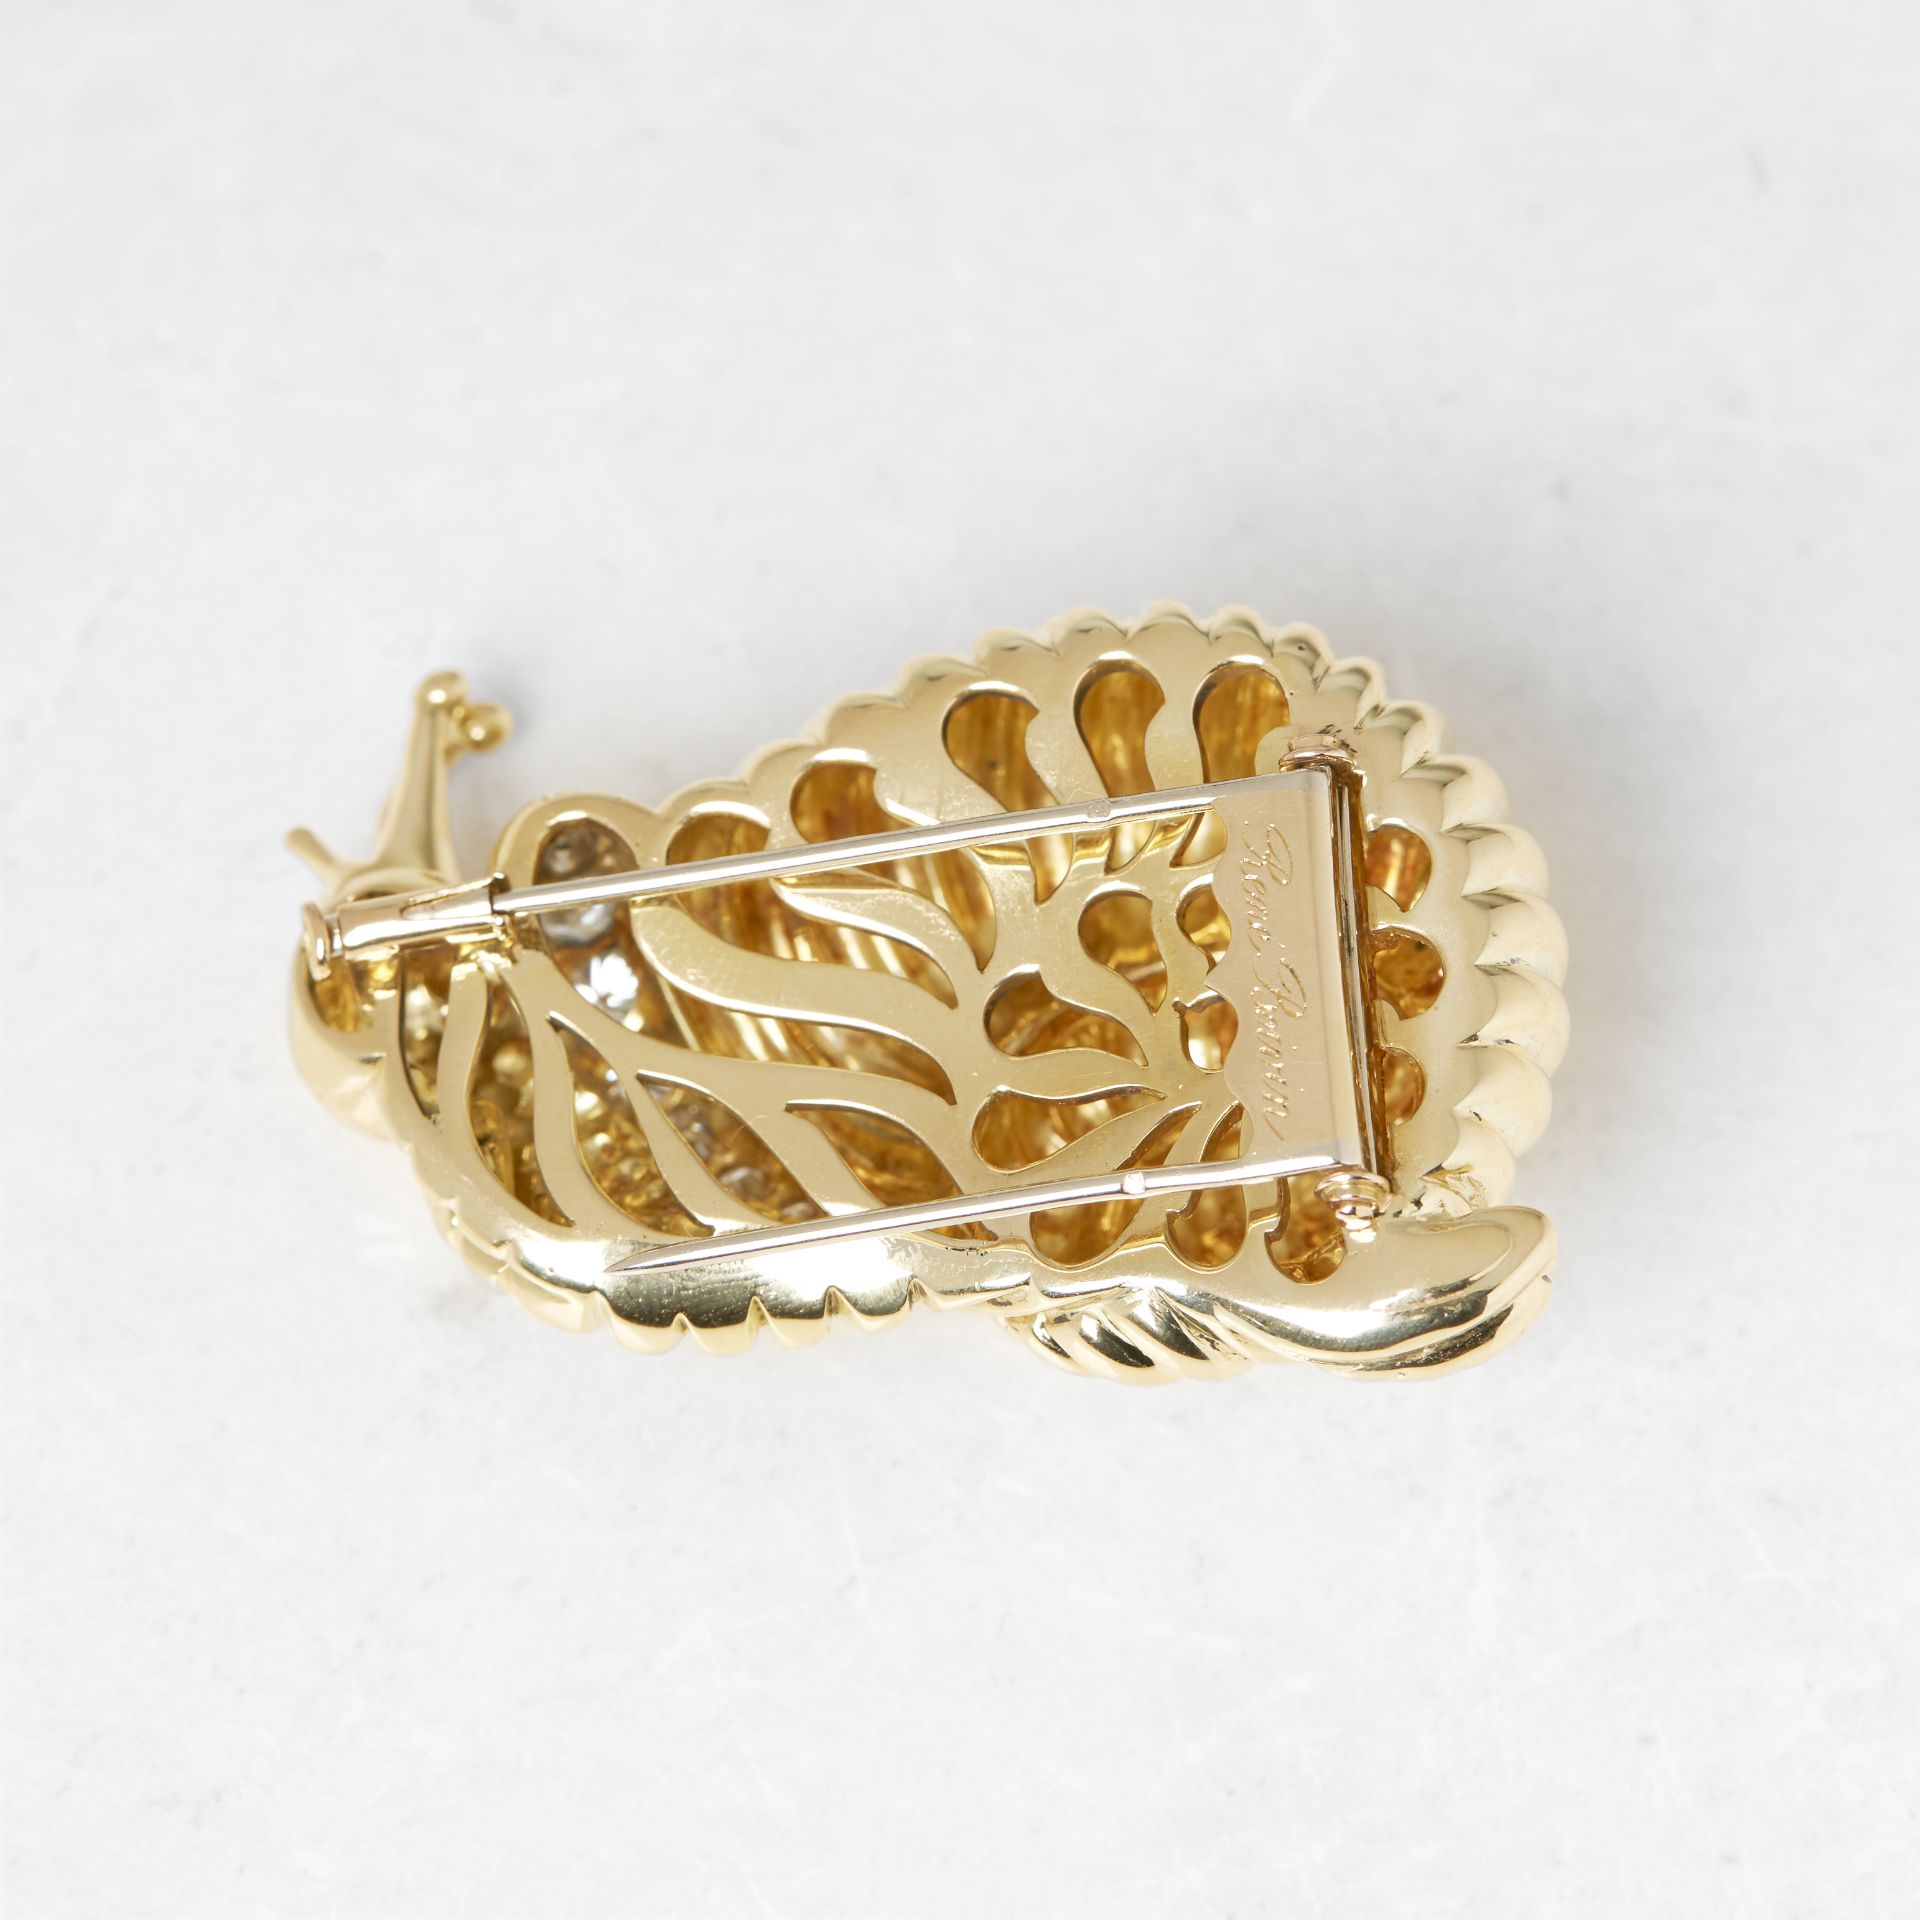 Rene Boivin 18k Yellow Gold Diamond Snail Brooch with Presentation Box - Image 16 of 19